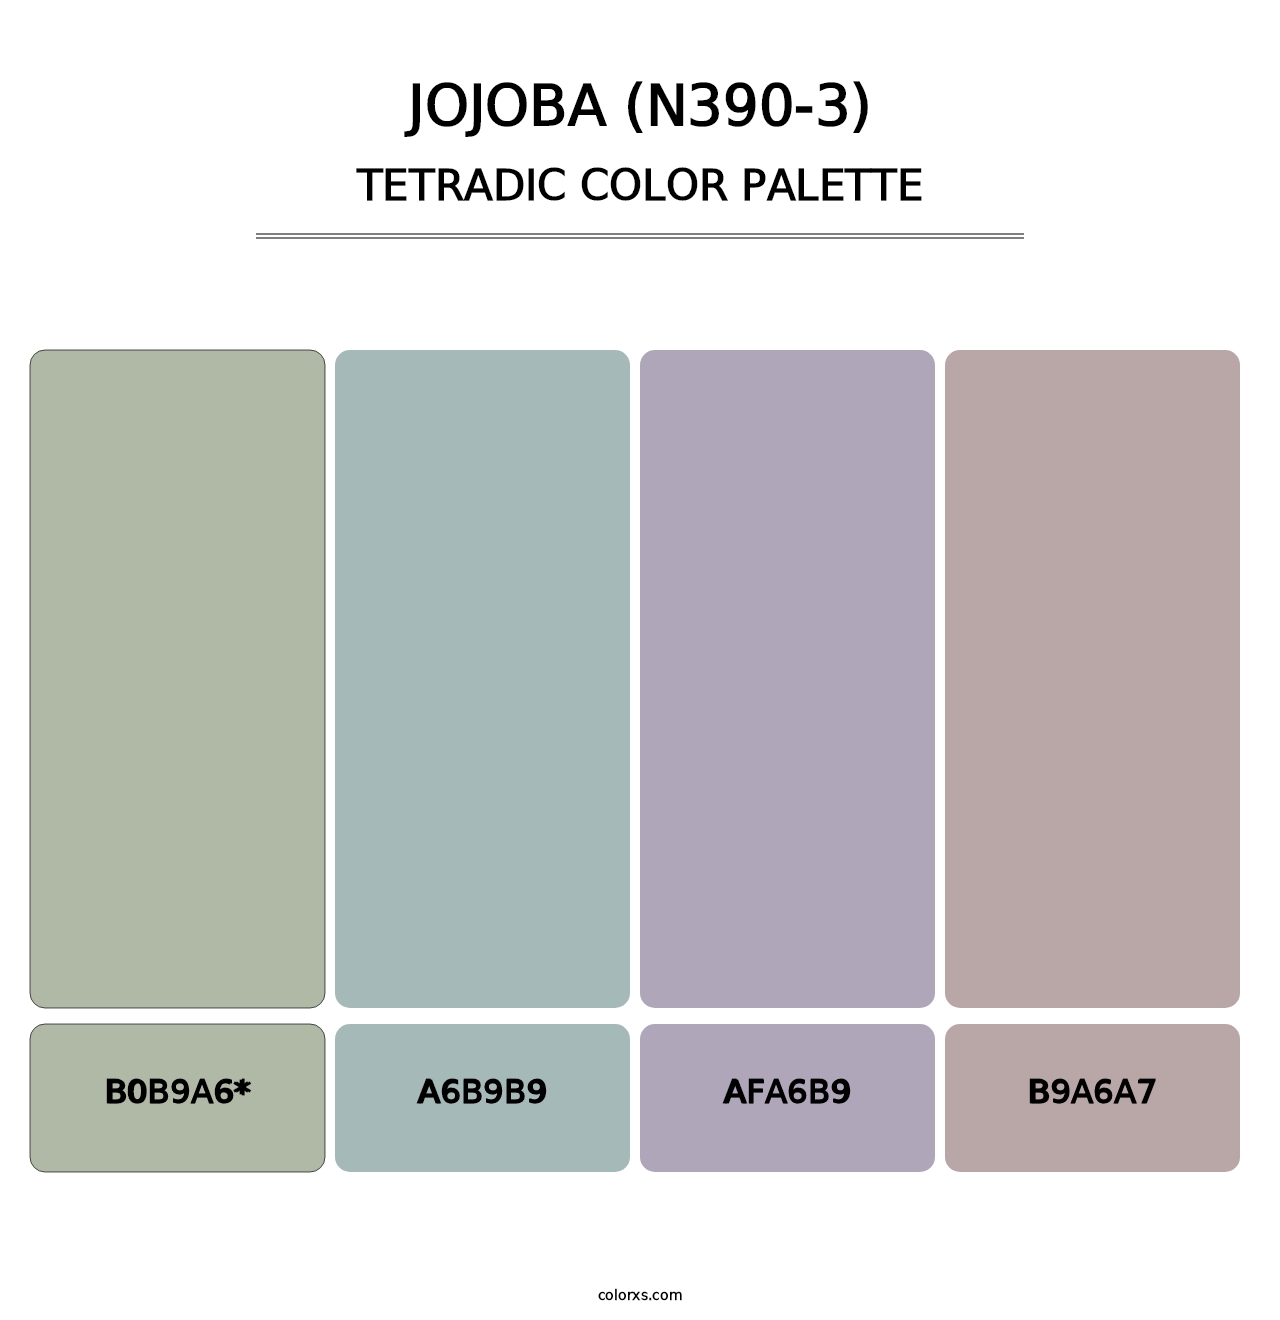 Jojoba (N390-3) - Tetradic Color Palette